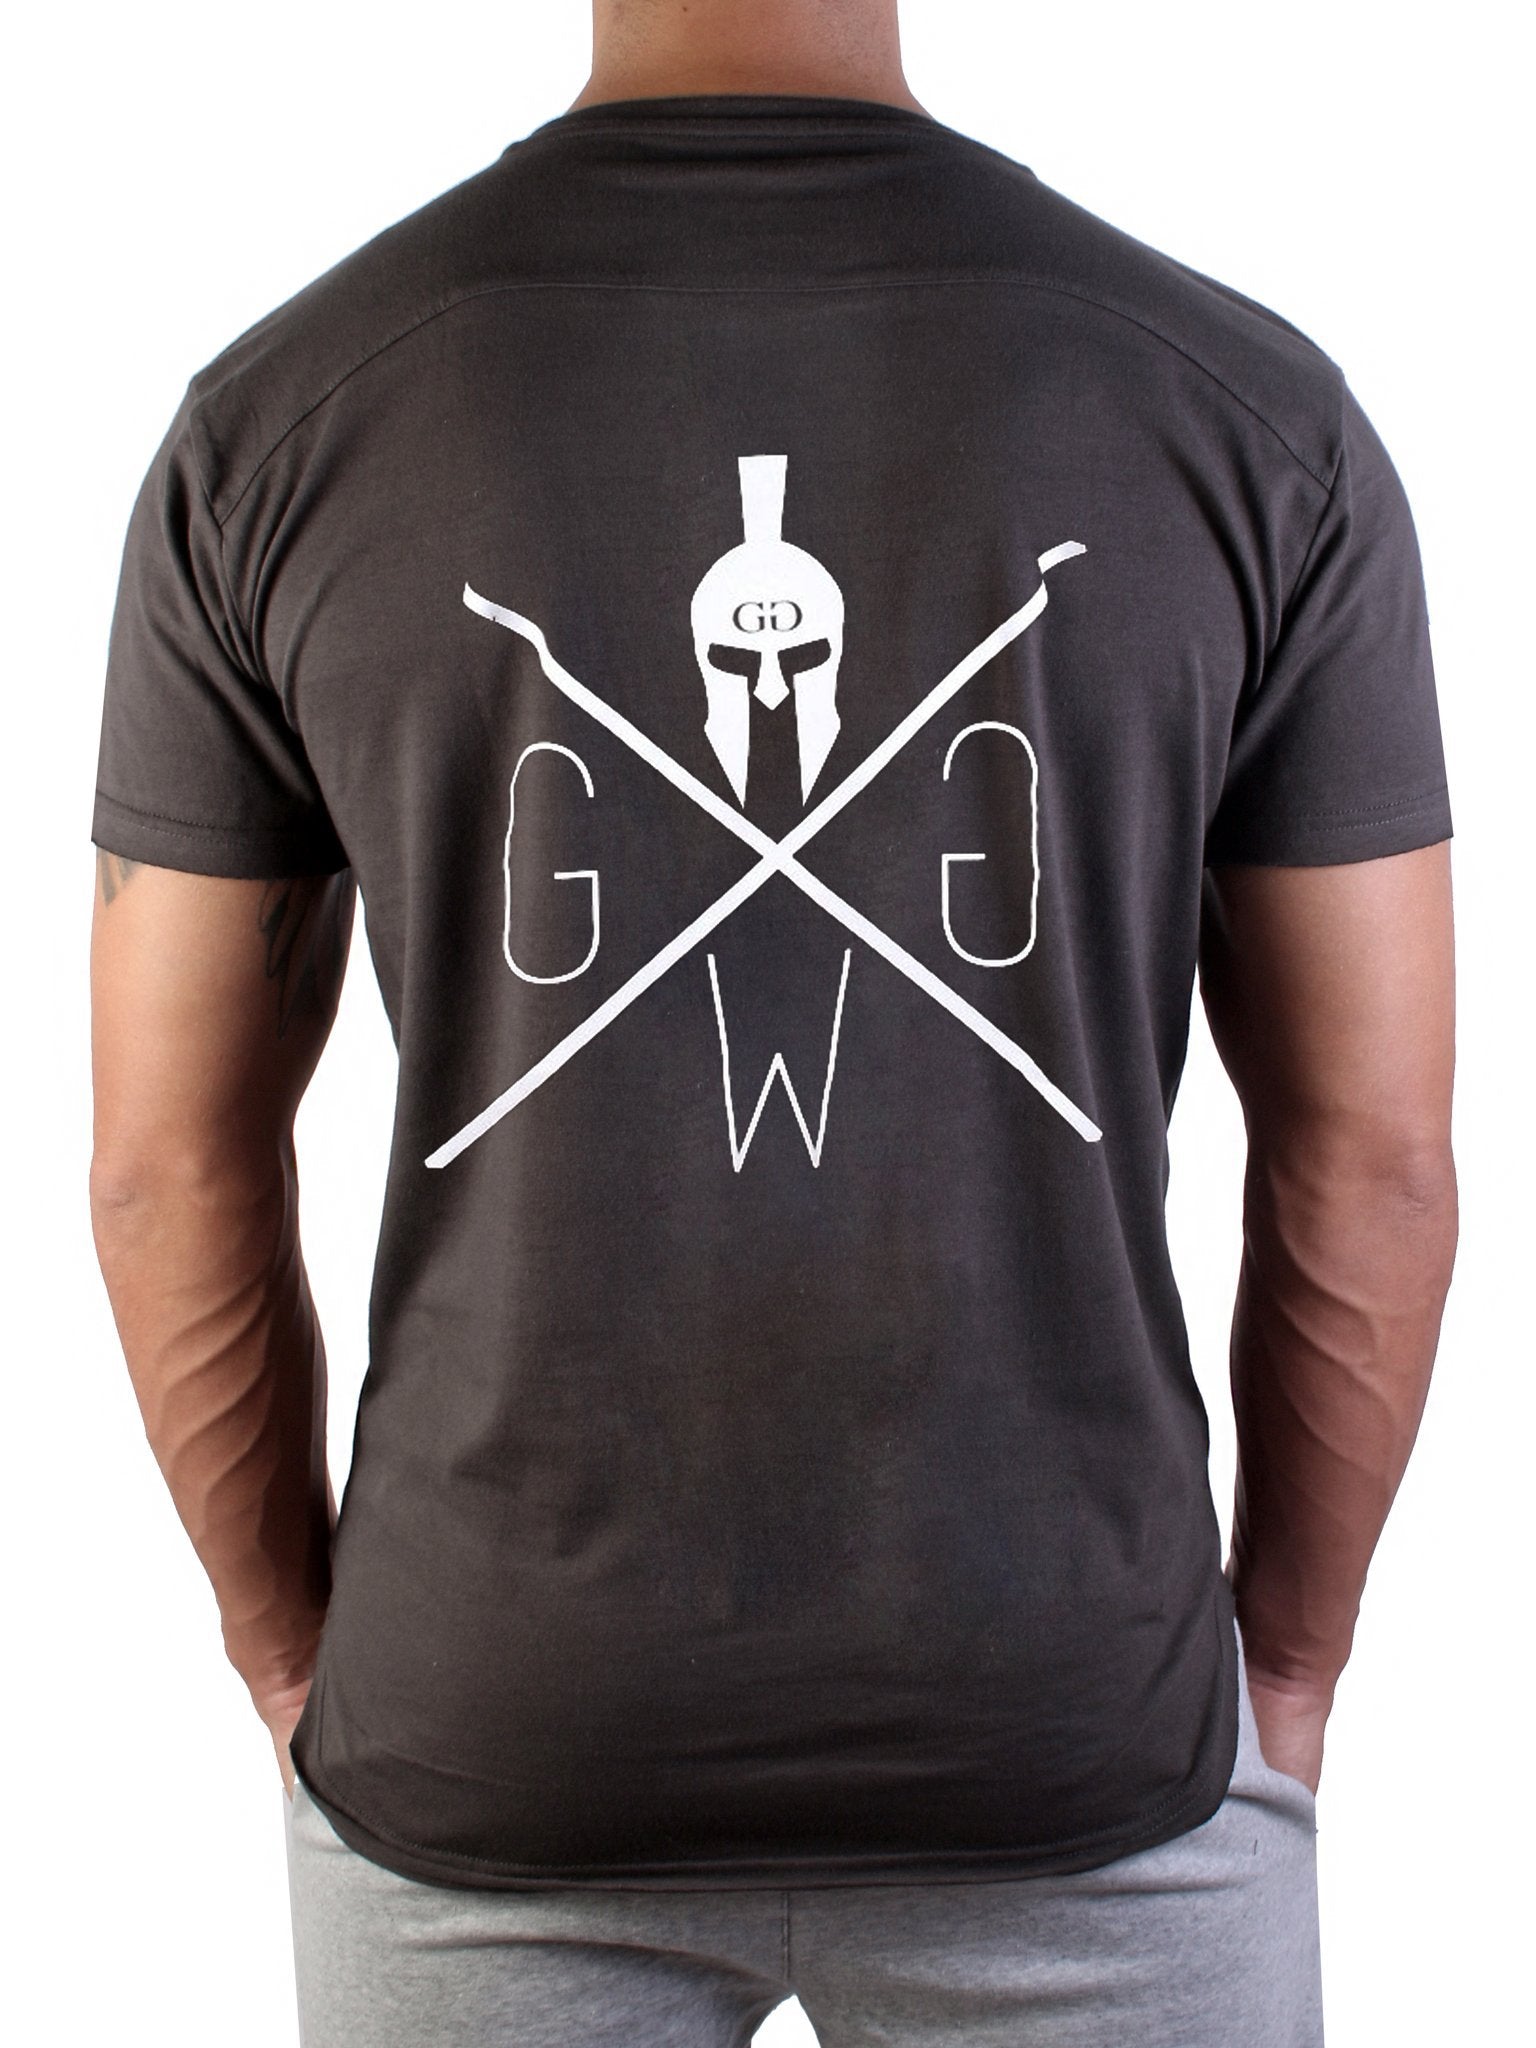 "Warriors" College T-Shirt - Gunmetal - Gym Generation®--www.gymgeneration.ch